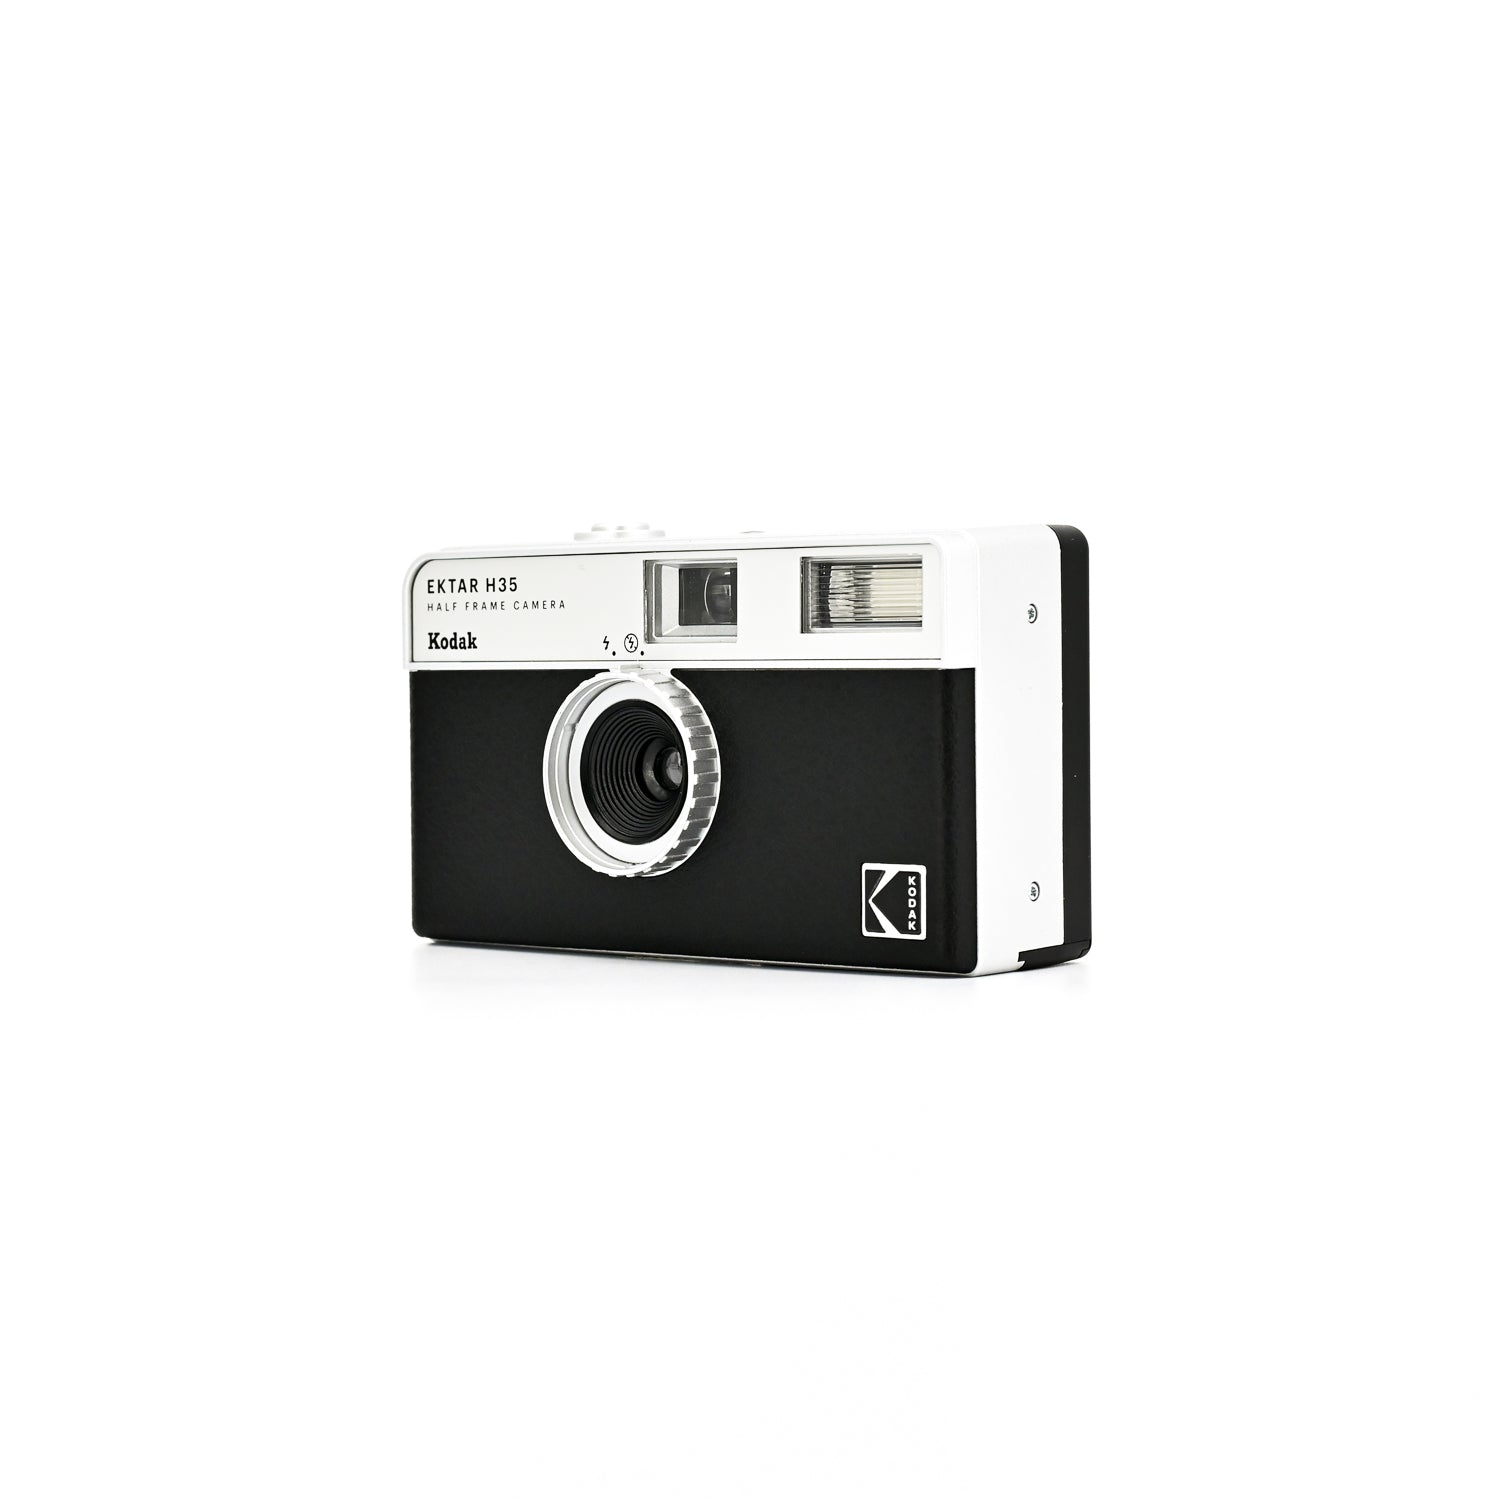 5PCS KODAK EKTAR H35 Half Frame Camera 35mm Film Camera Reusable Film  Camera With Flash Light For Wholesale - AliExpress